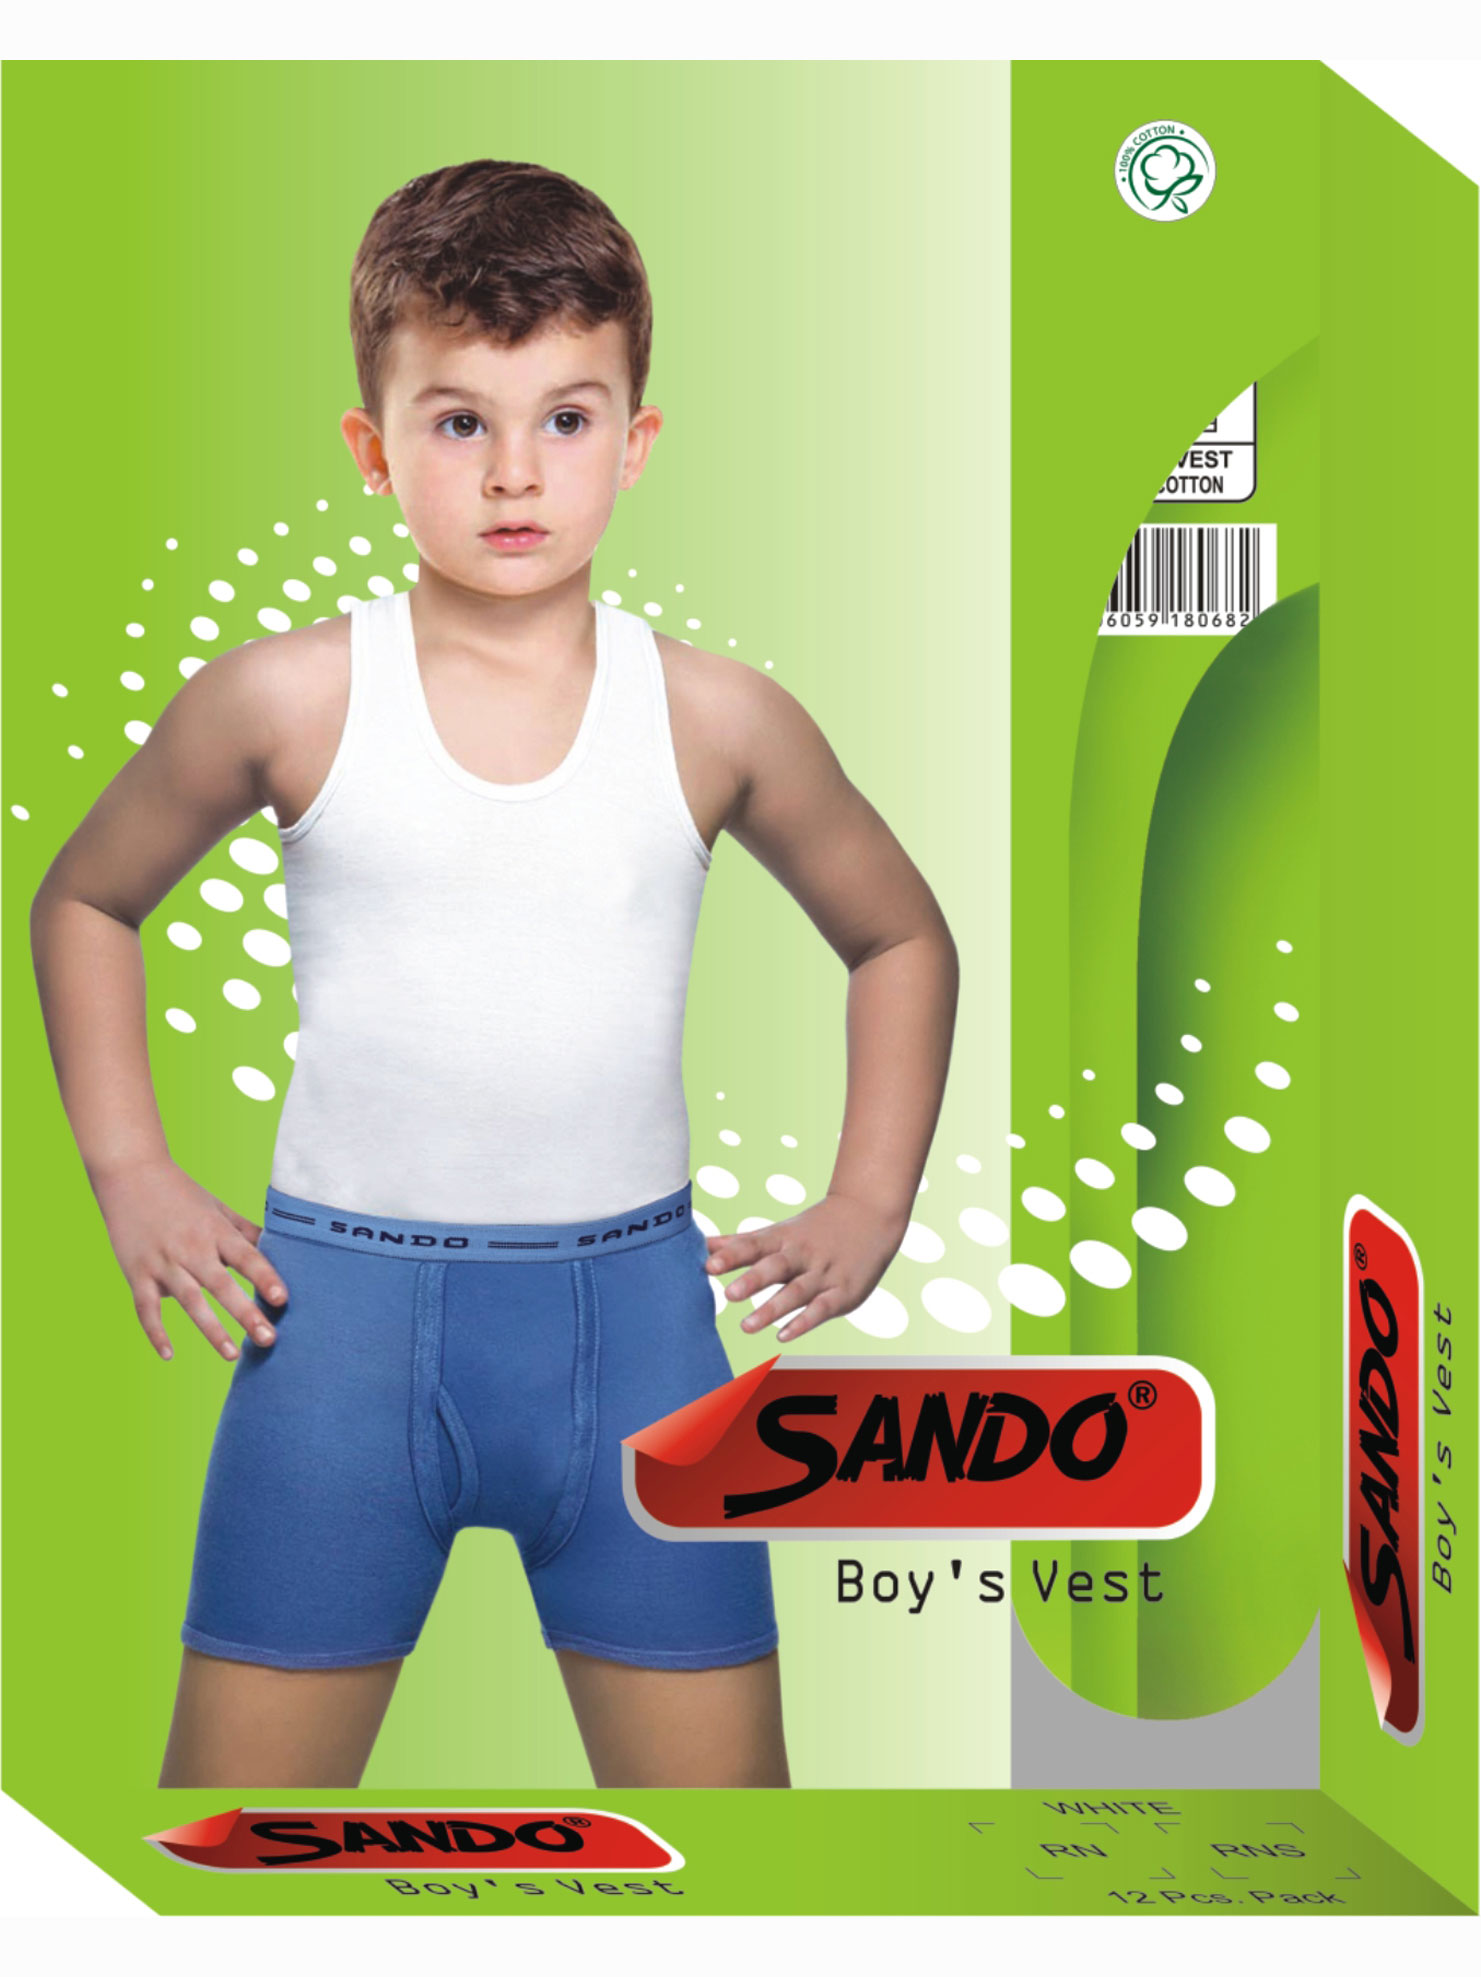 sando-boys-vest-tshirt-ca9bff40-sando boys vest - t-shirt.jpg0